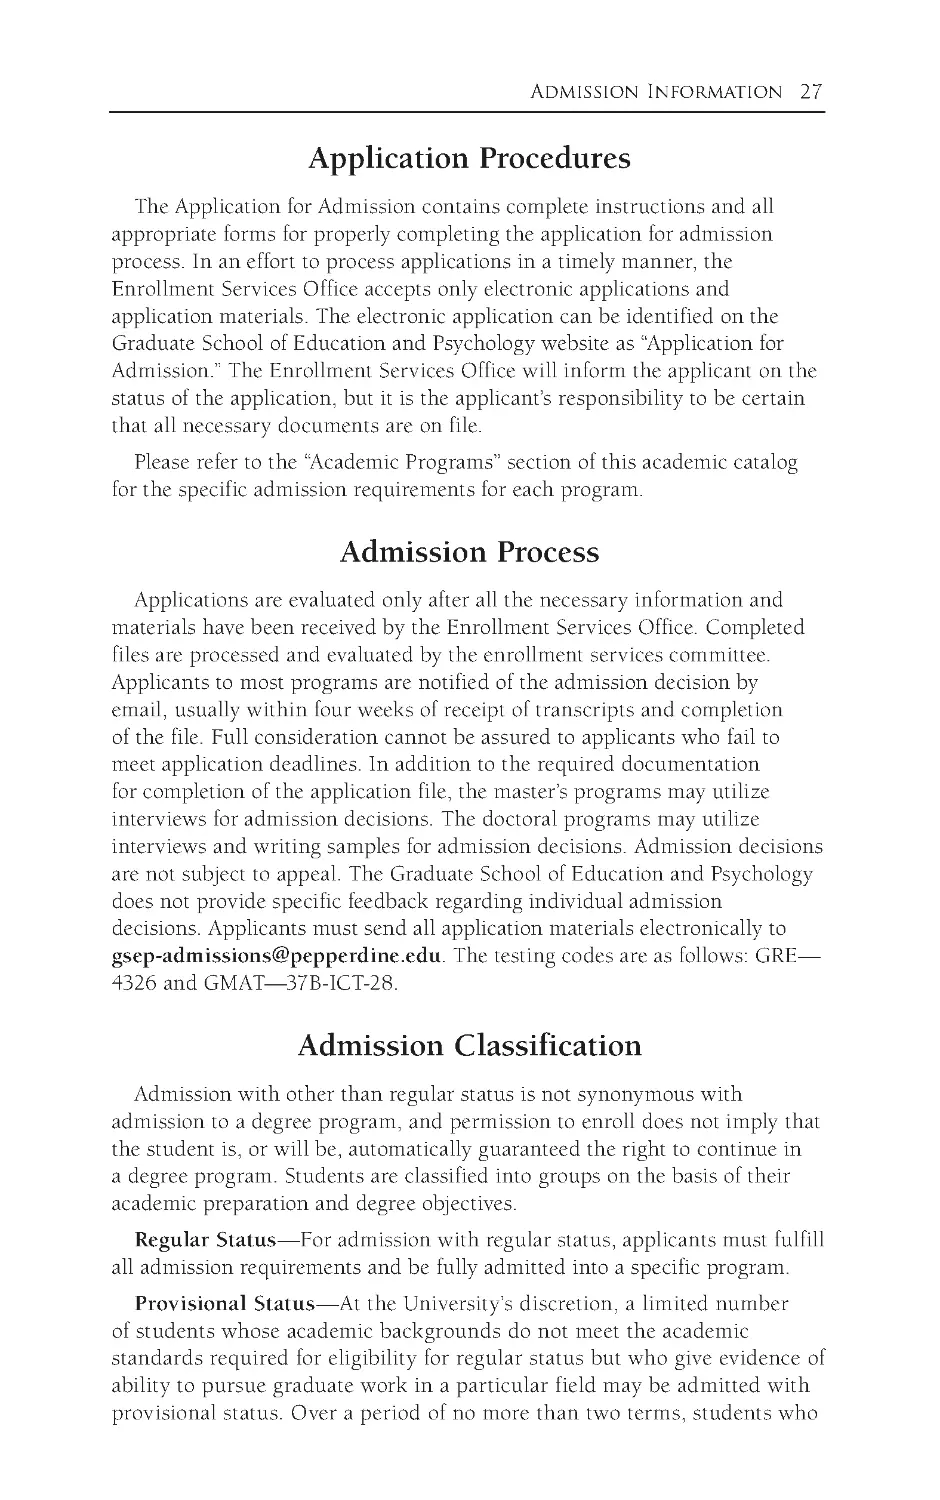 Application Procedures
Admission Process
Admission Classification